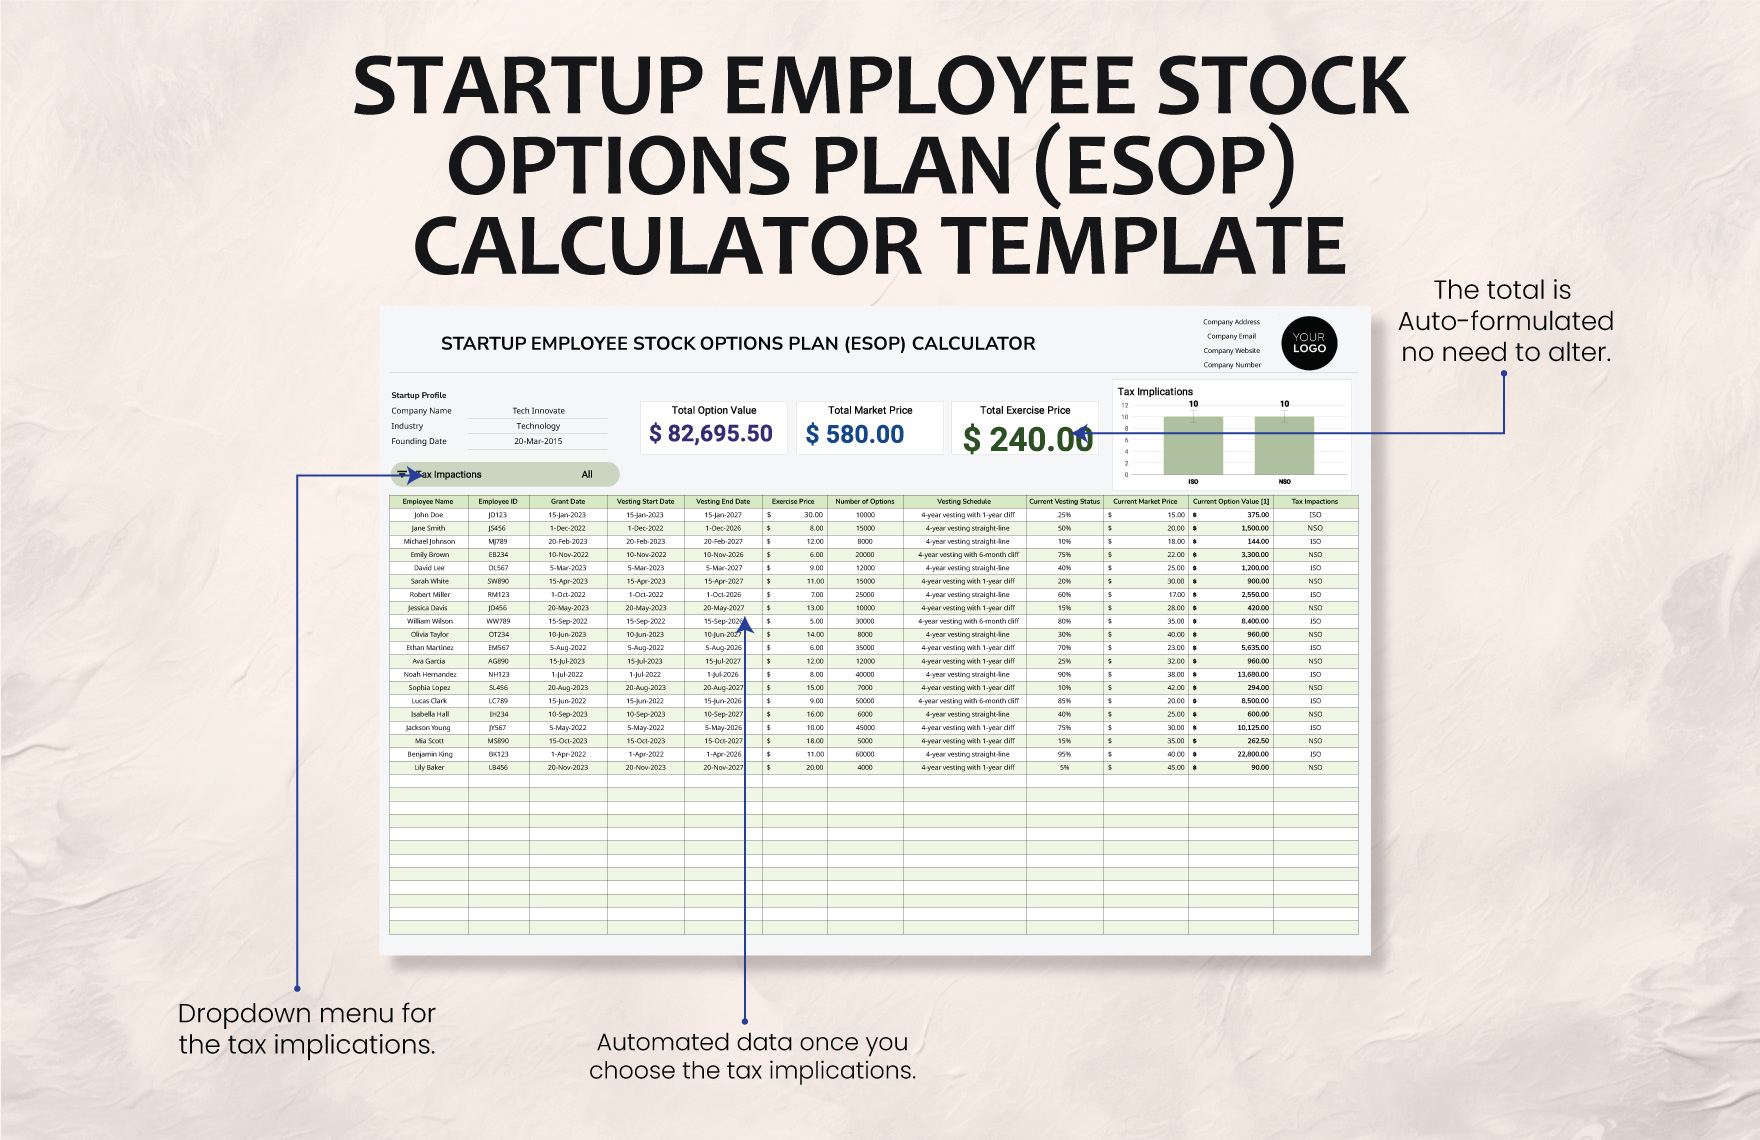 Startup Employee Stock Options Plan (ESOP) Calculator Template